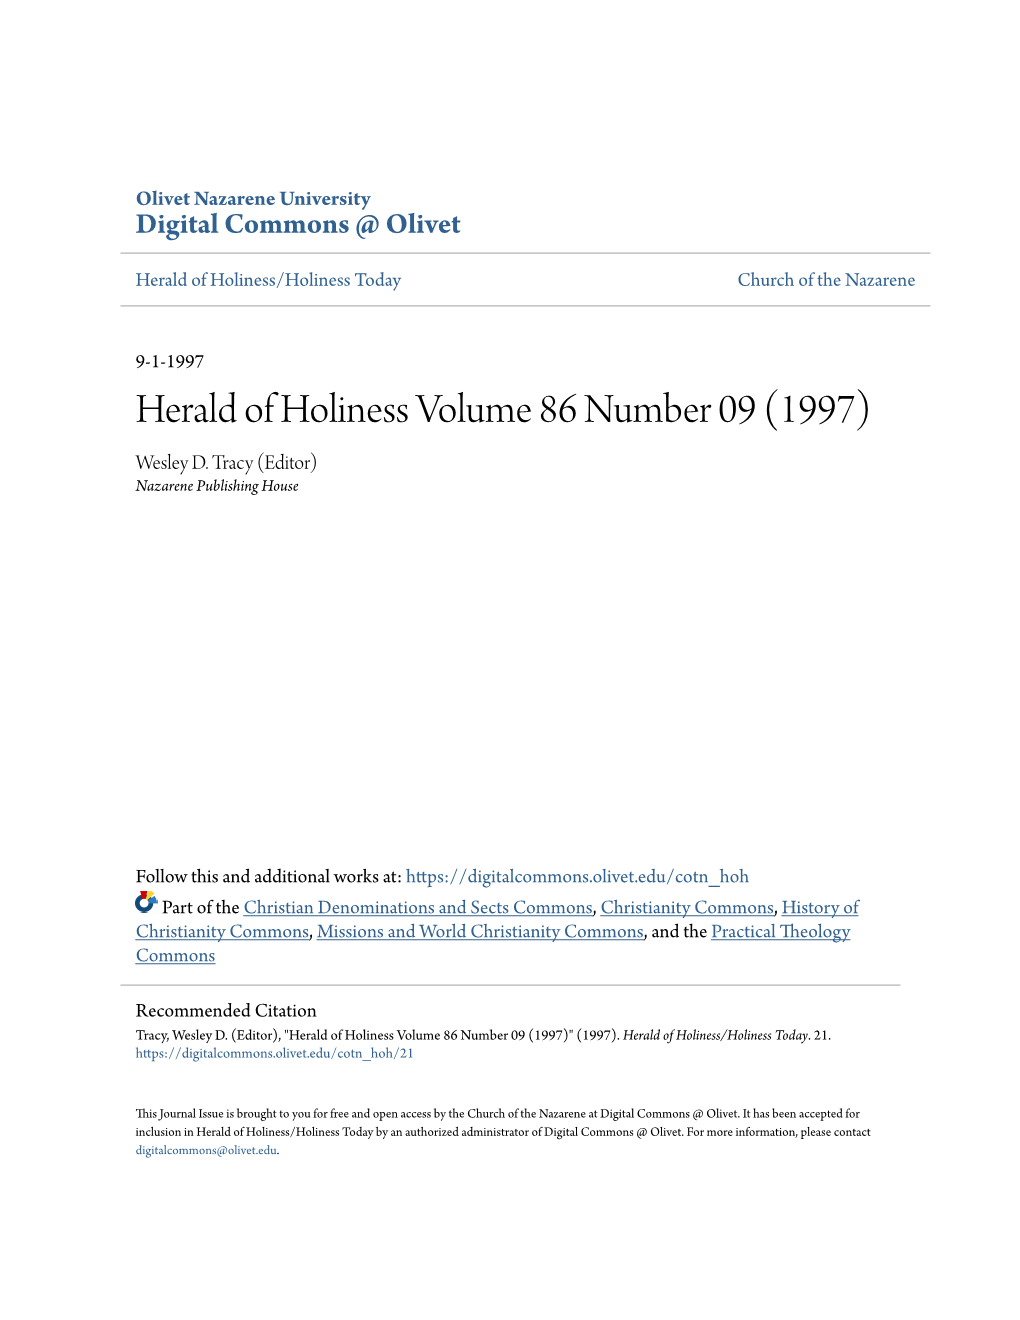 Herald of Holiness Volume 86 Number 09 (1997) Wesley D